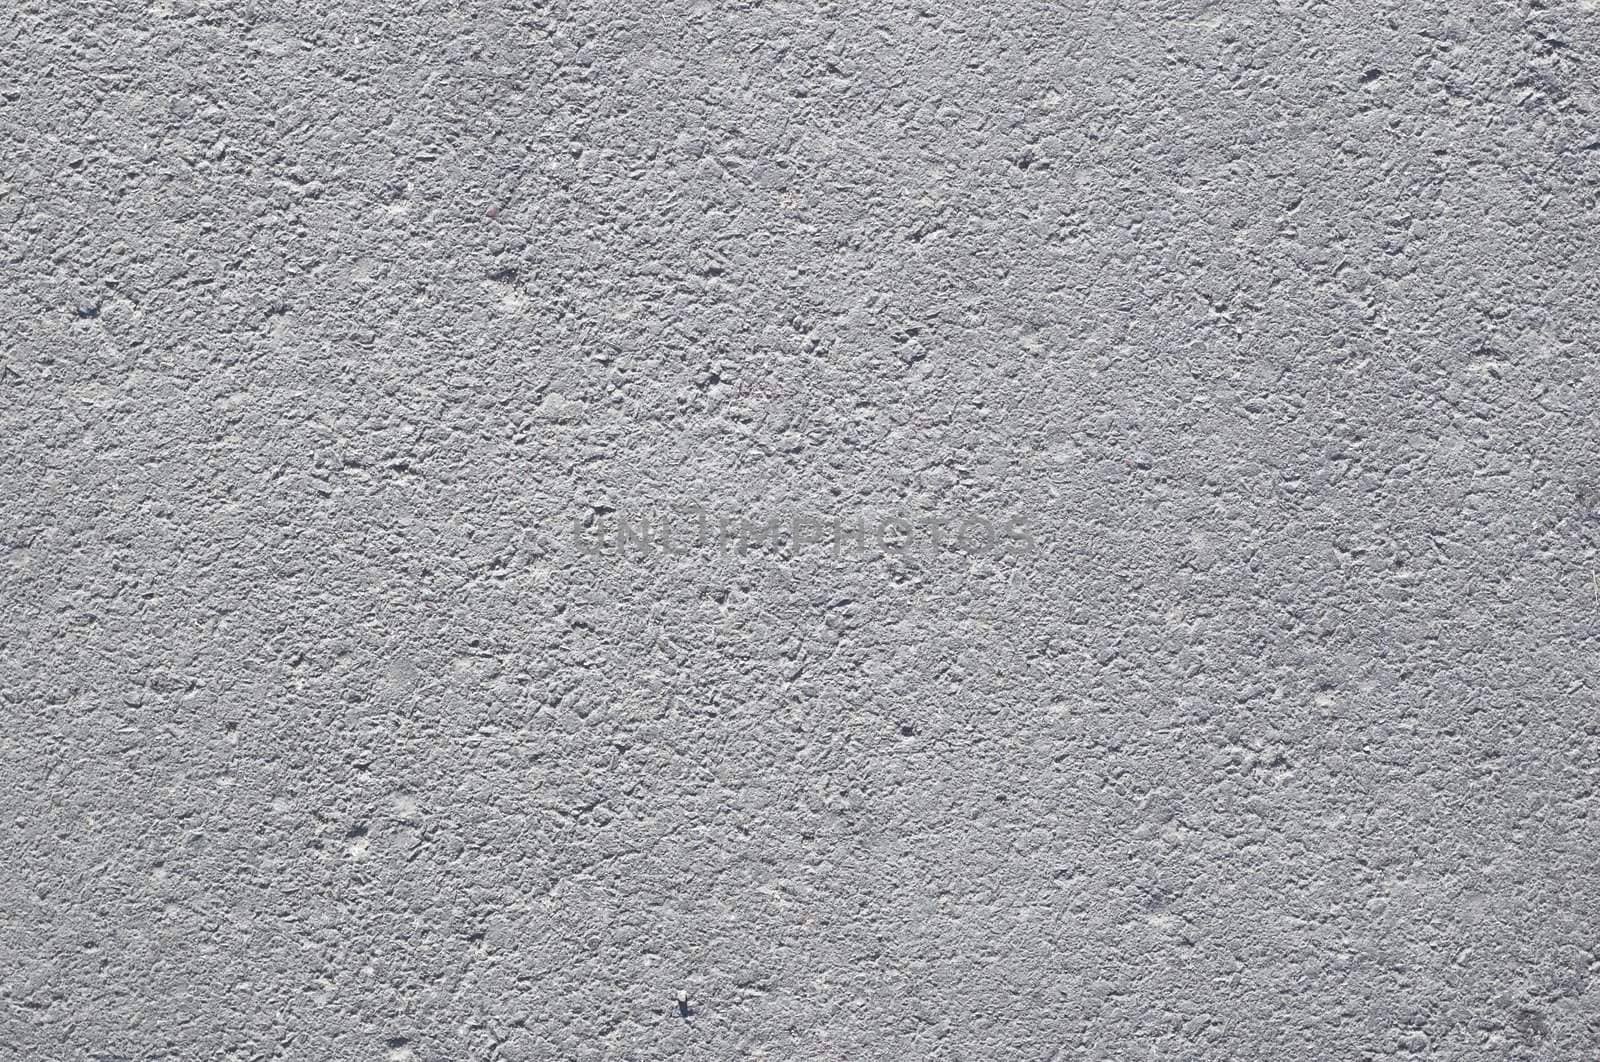 dusty asphalt texture #1 by starush